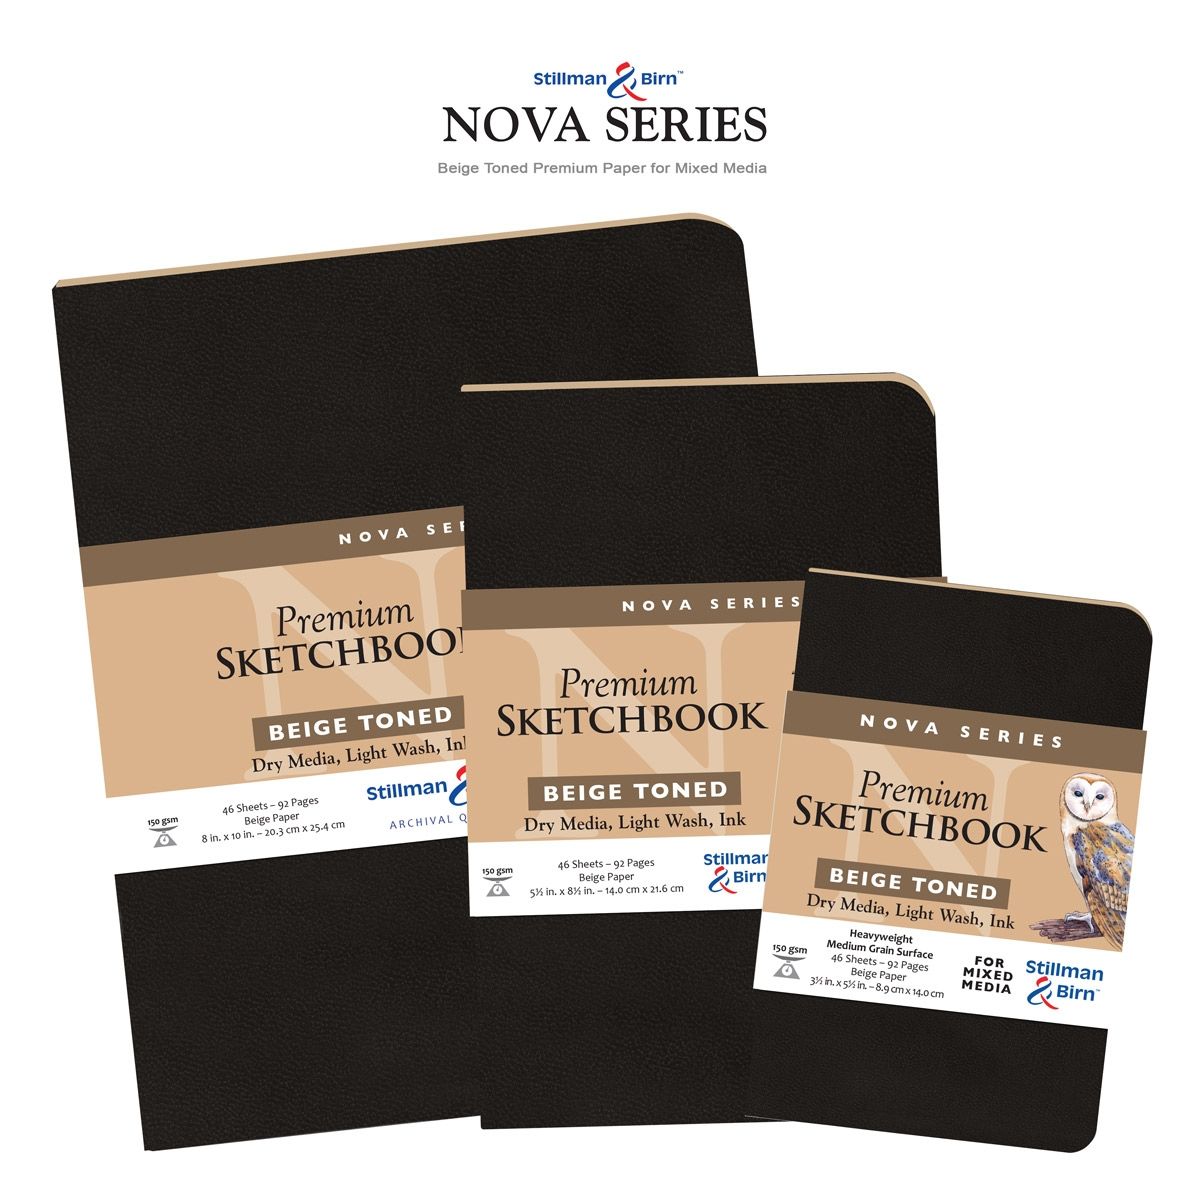 Nova Series Softbound Sketchbooks - Stillman & Birn